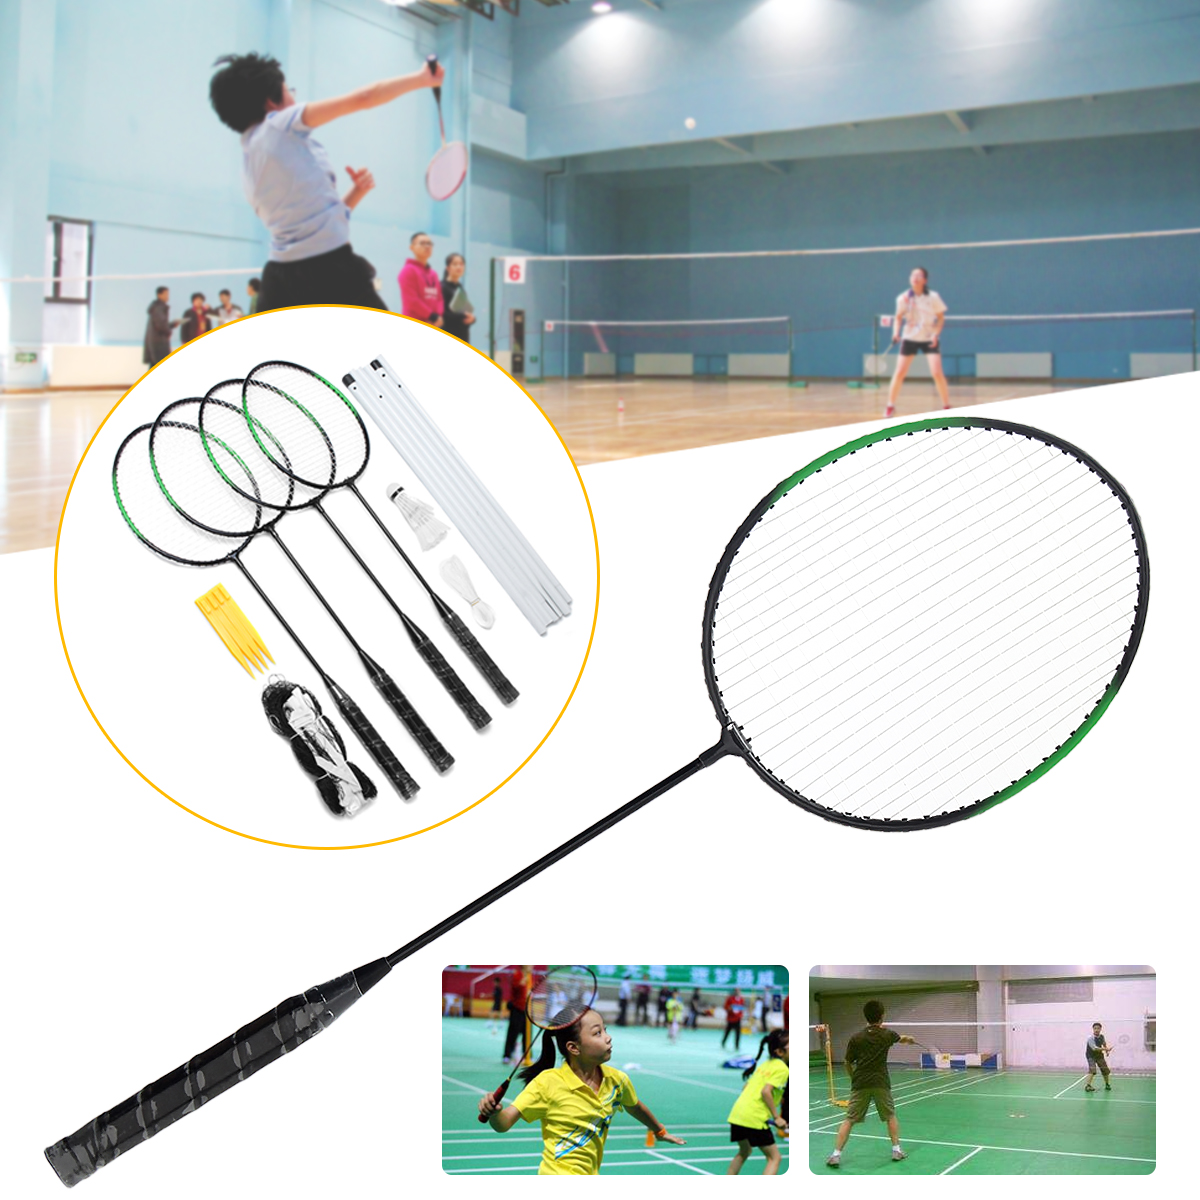 4-Player-Aluminum-Alloy-Racket-Professional-Badminton-Set-with-Net-Carry-Bag-1198901-2